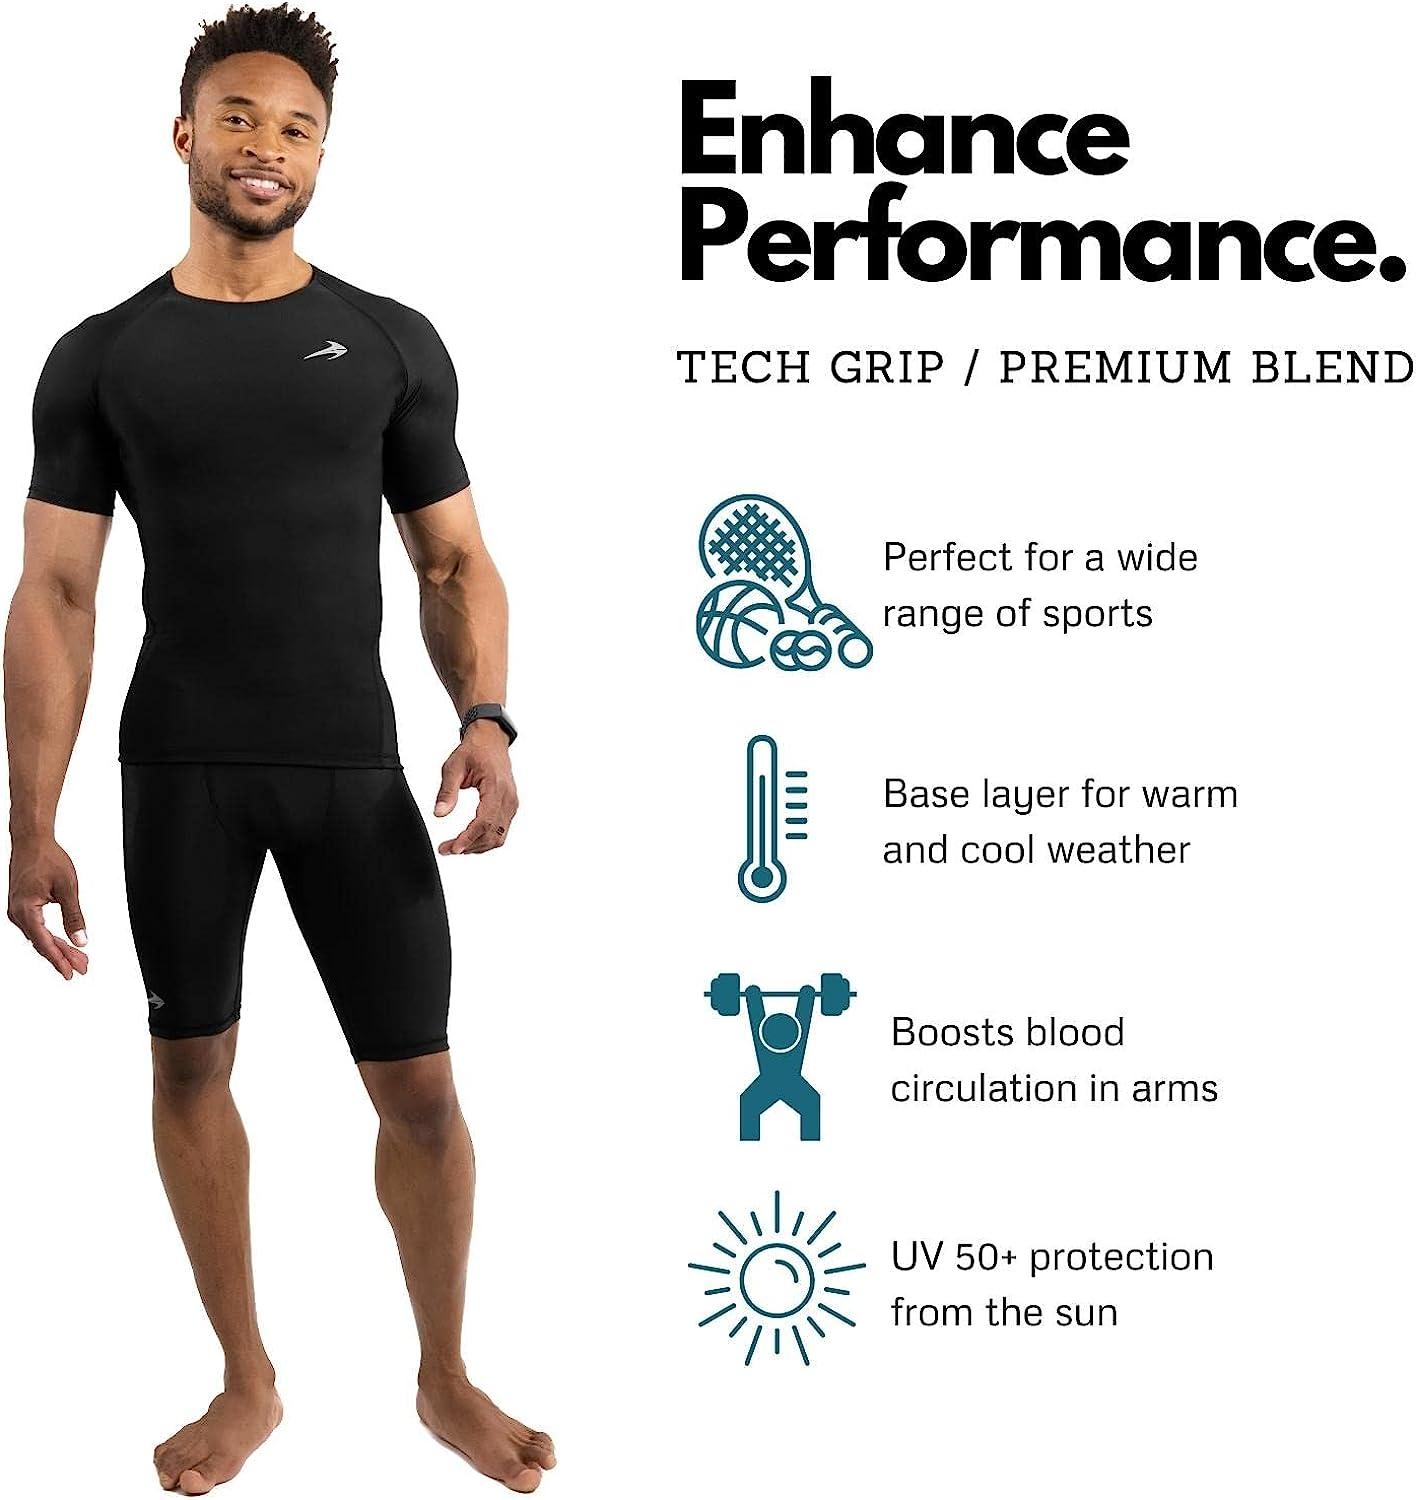 CompressionZ Men's Short Sleeve Compression Shirt - Athletic Base